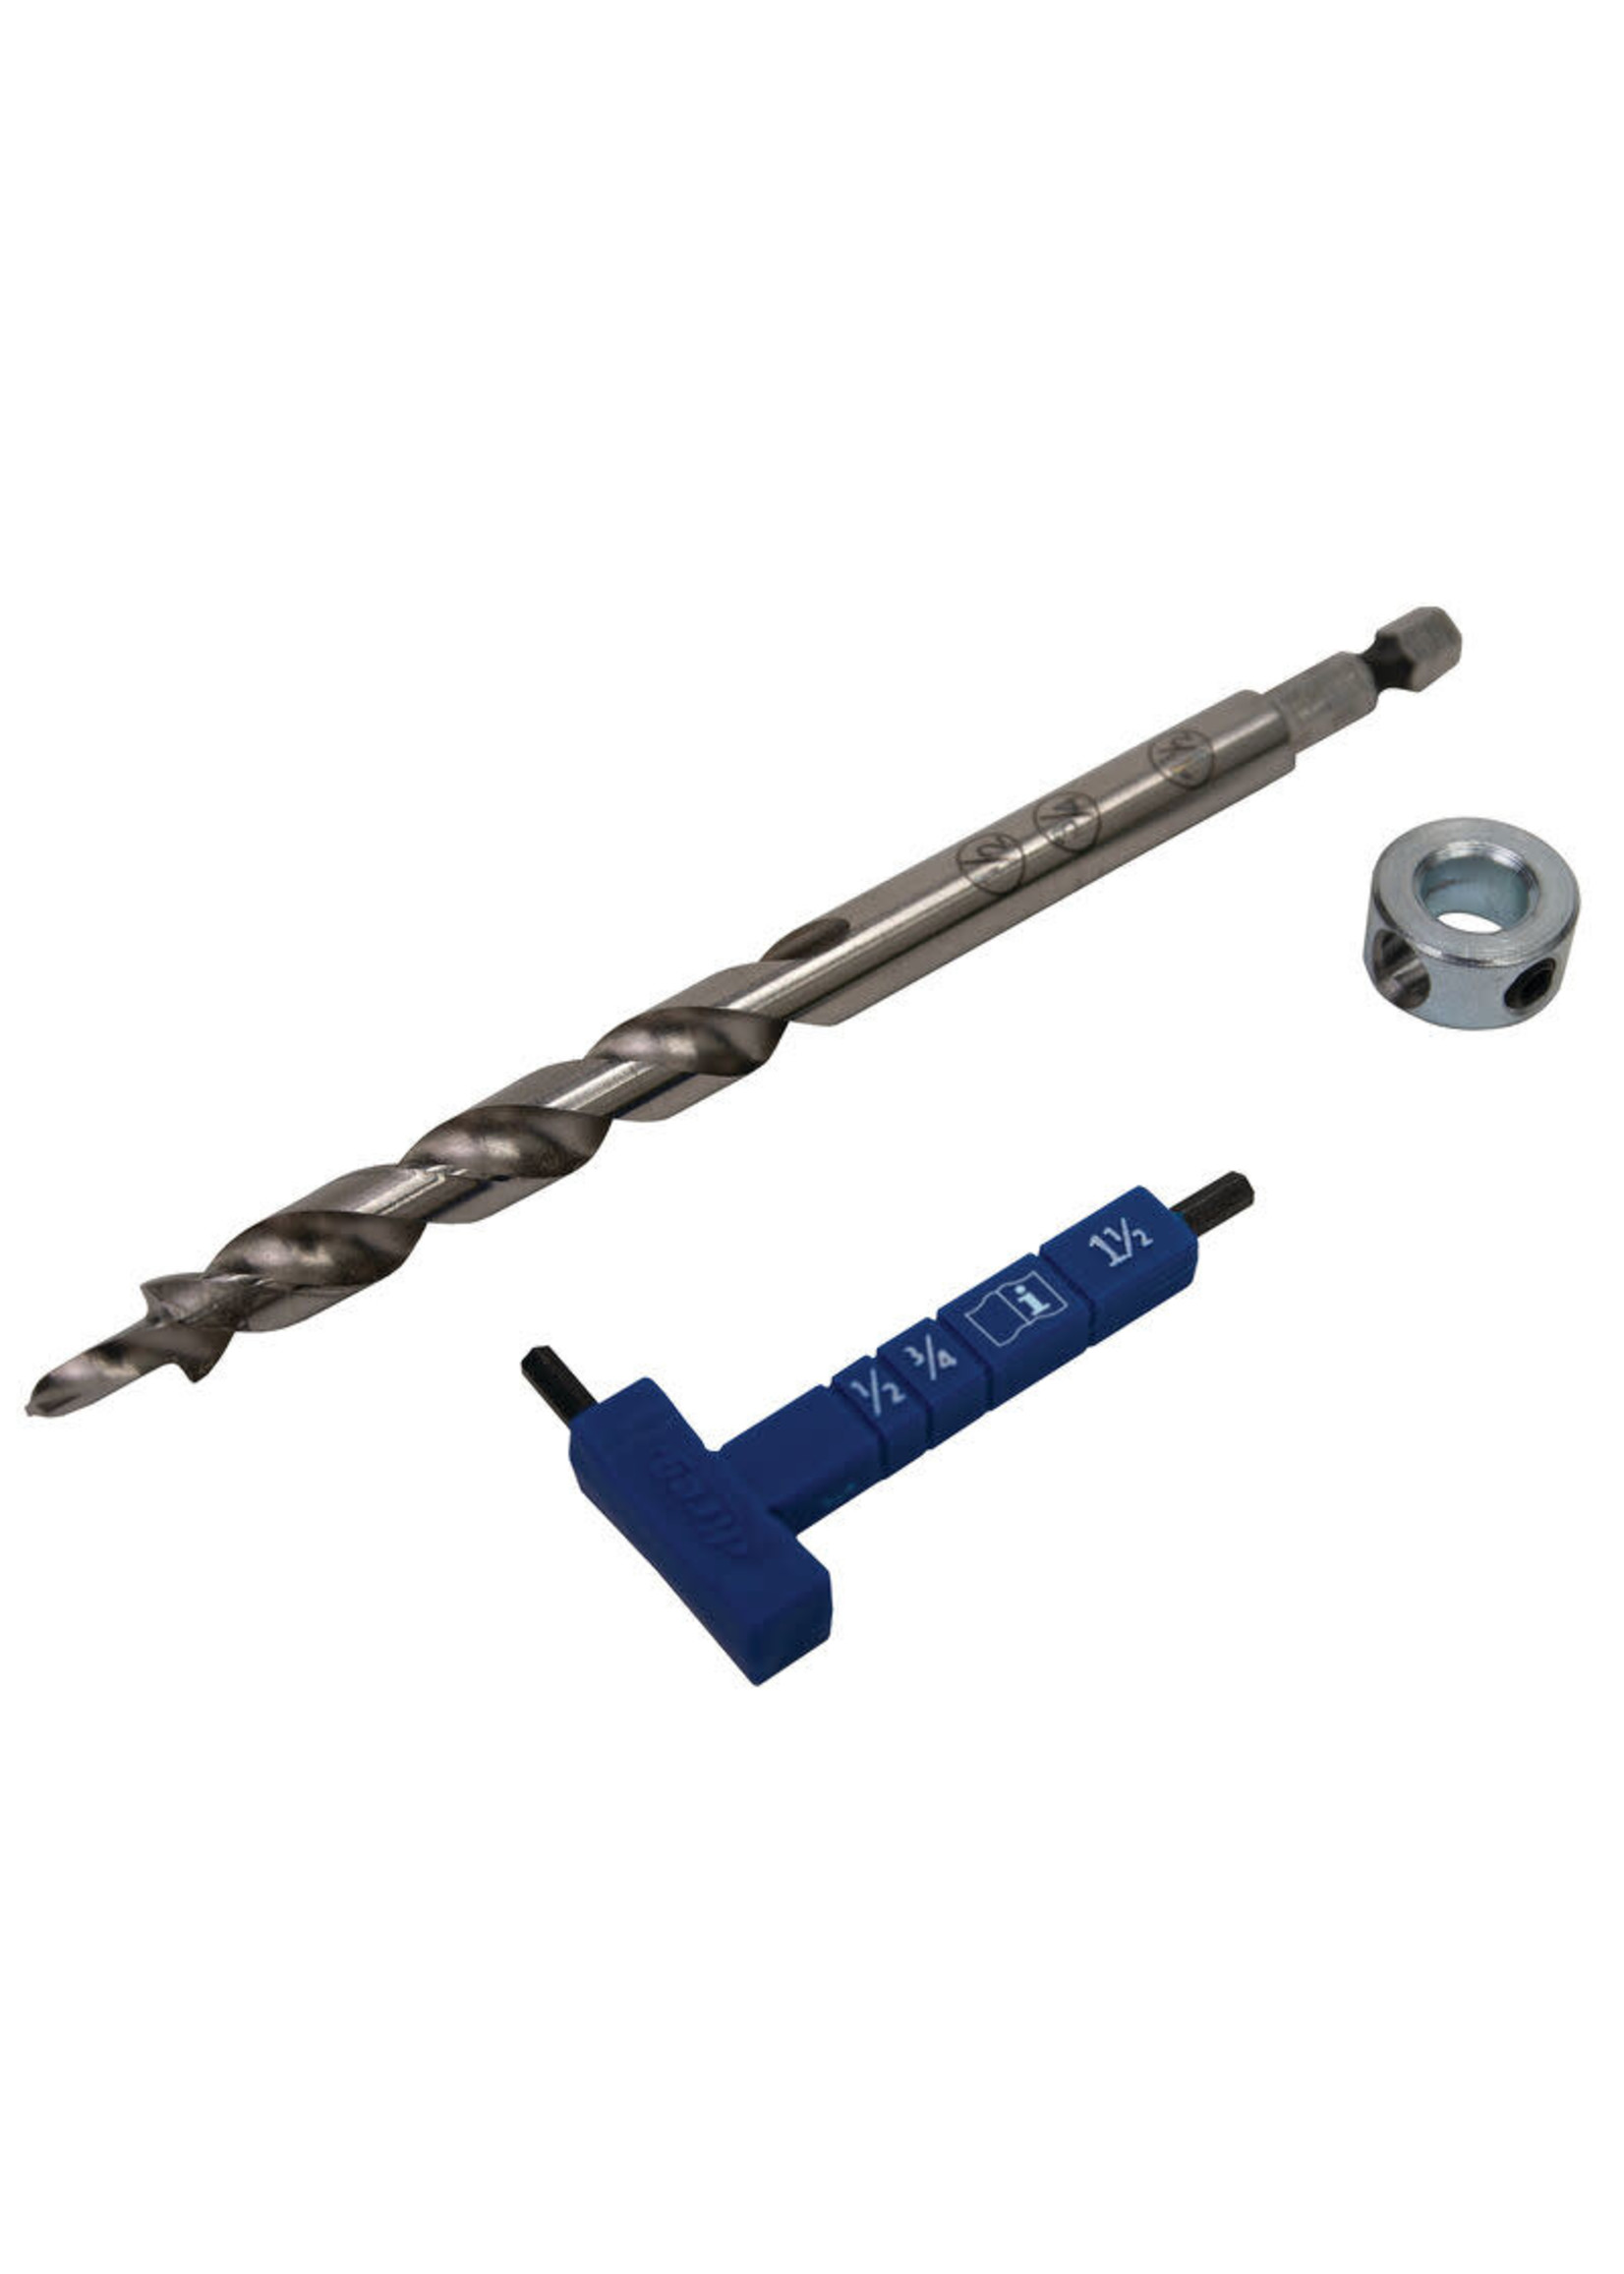 Kreg Kreg Easy-Set Drill Bit with Stop Collar & Gauge/Hex Wrench